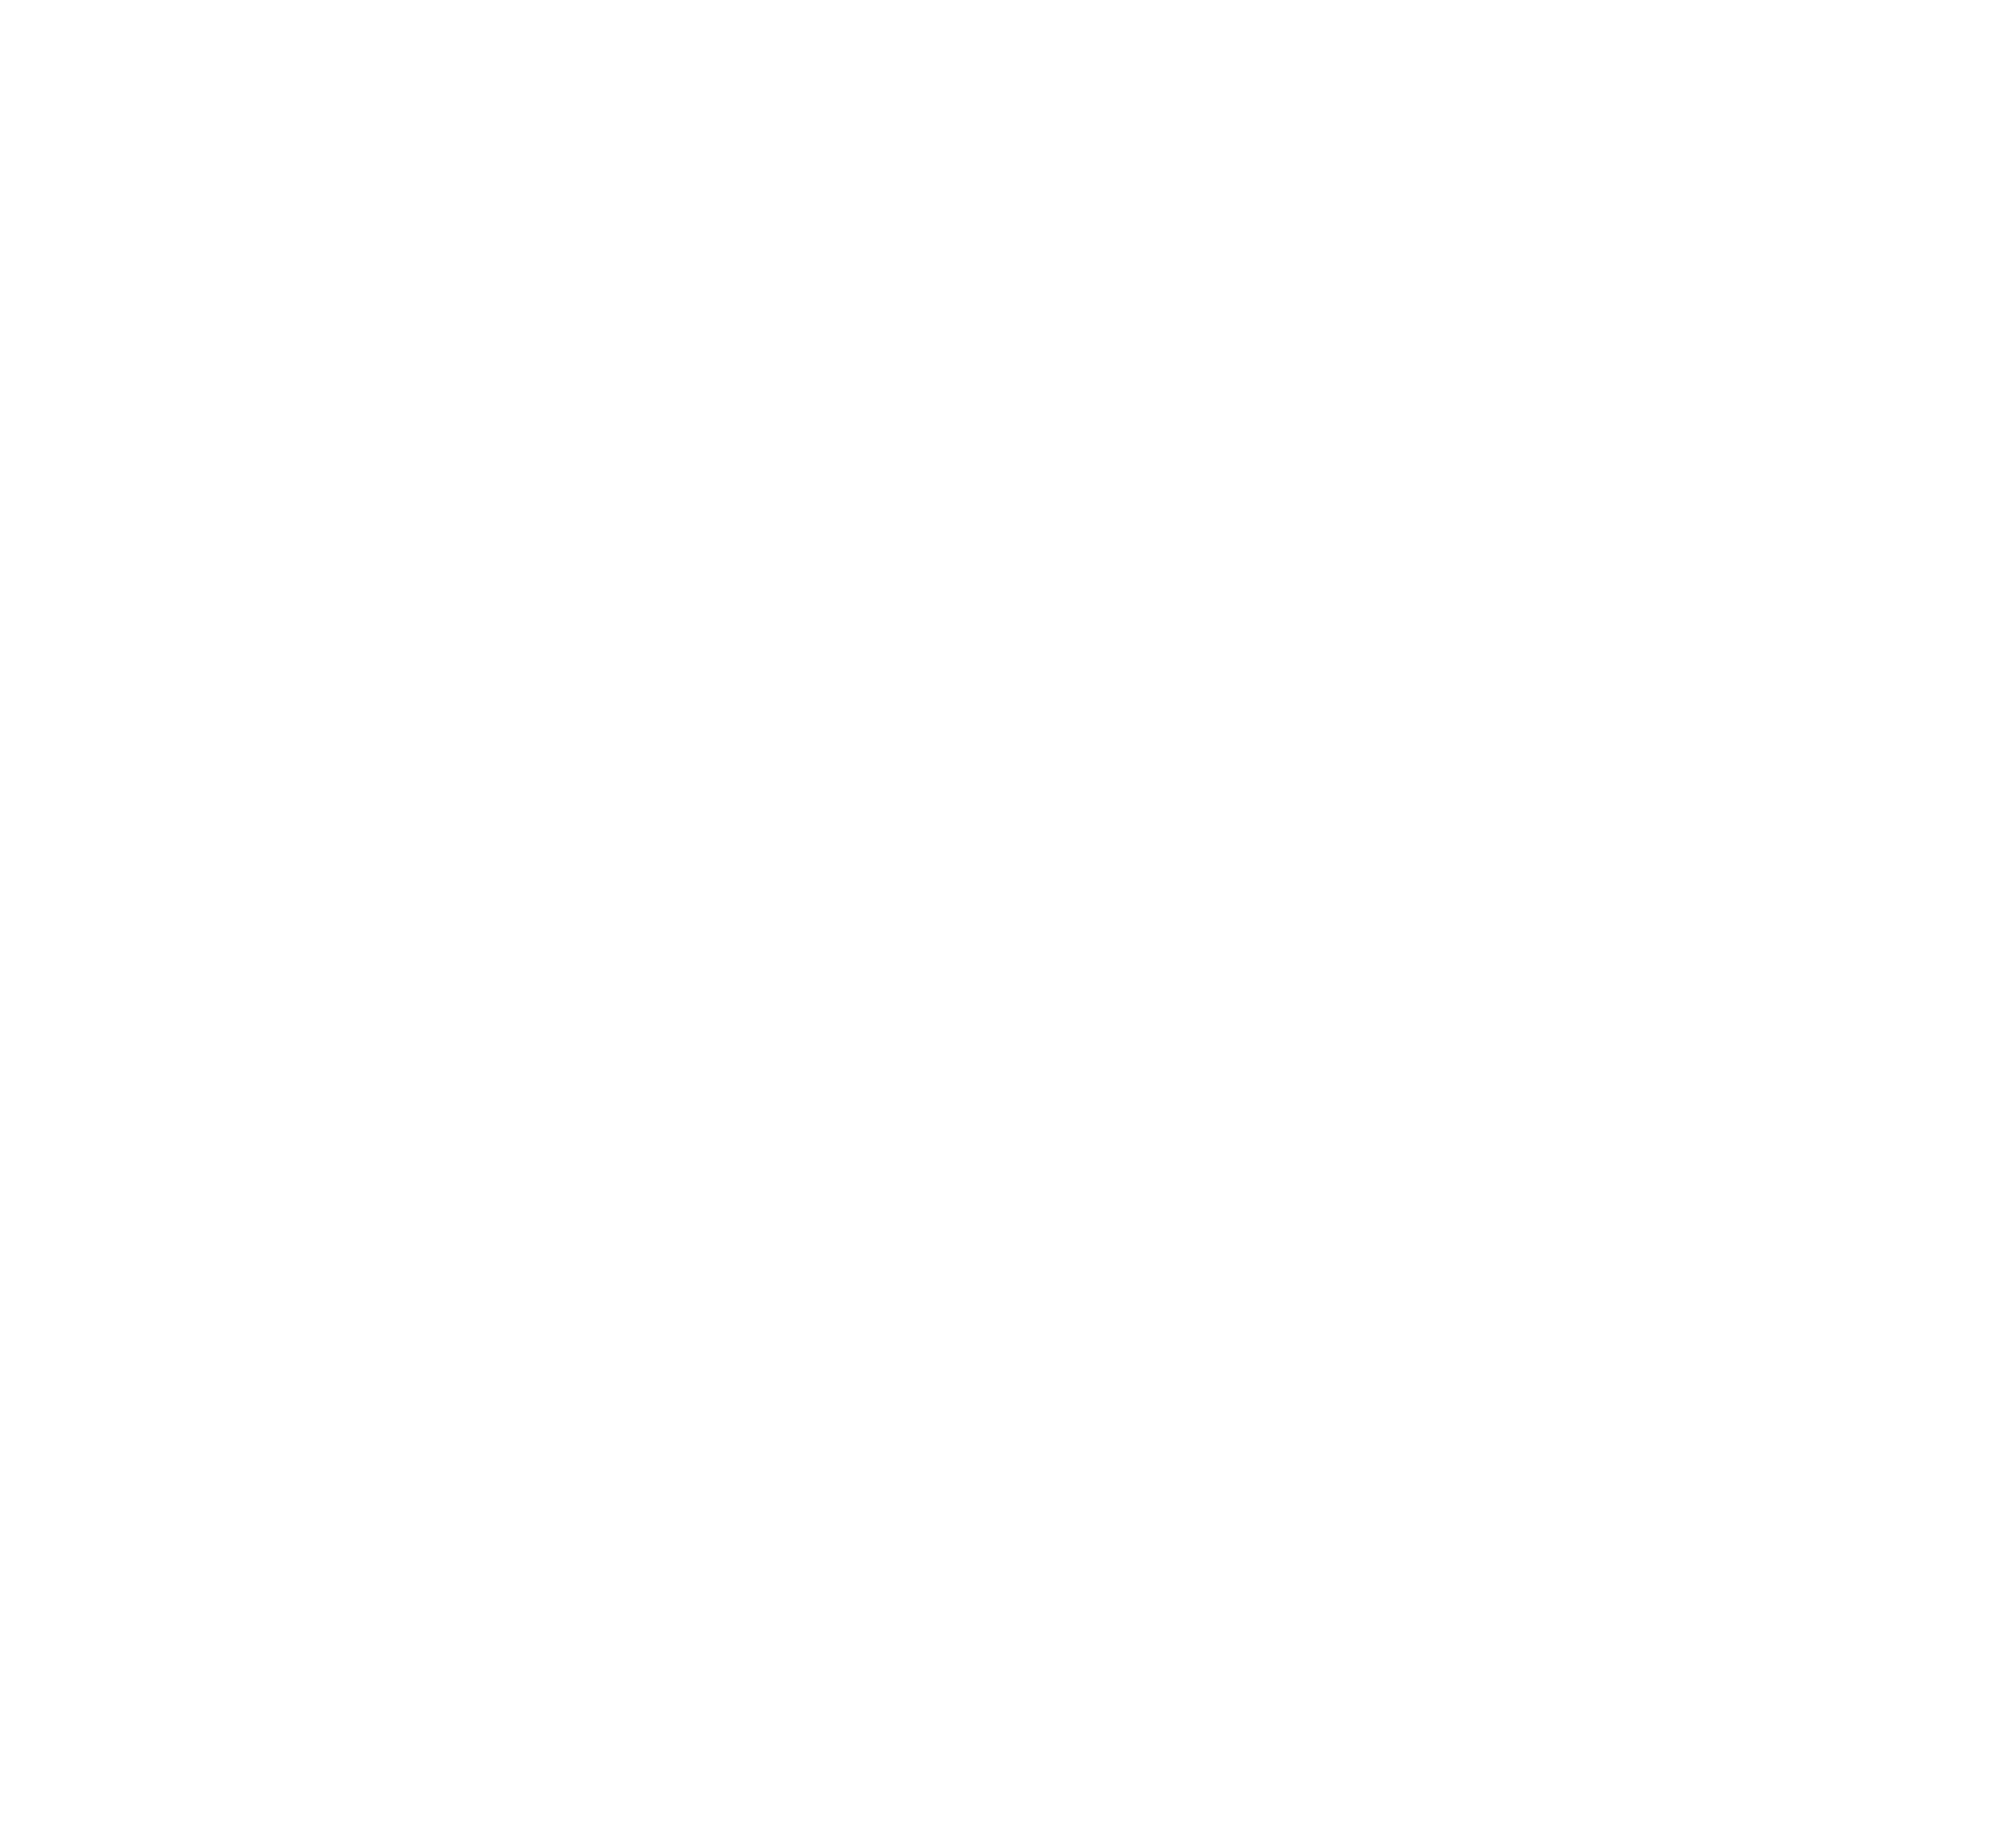 Getz logo white trans bg-05